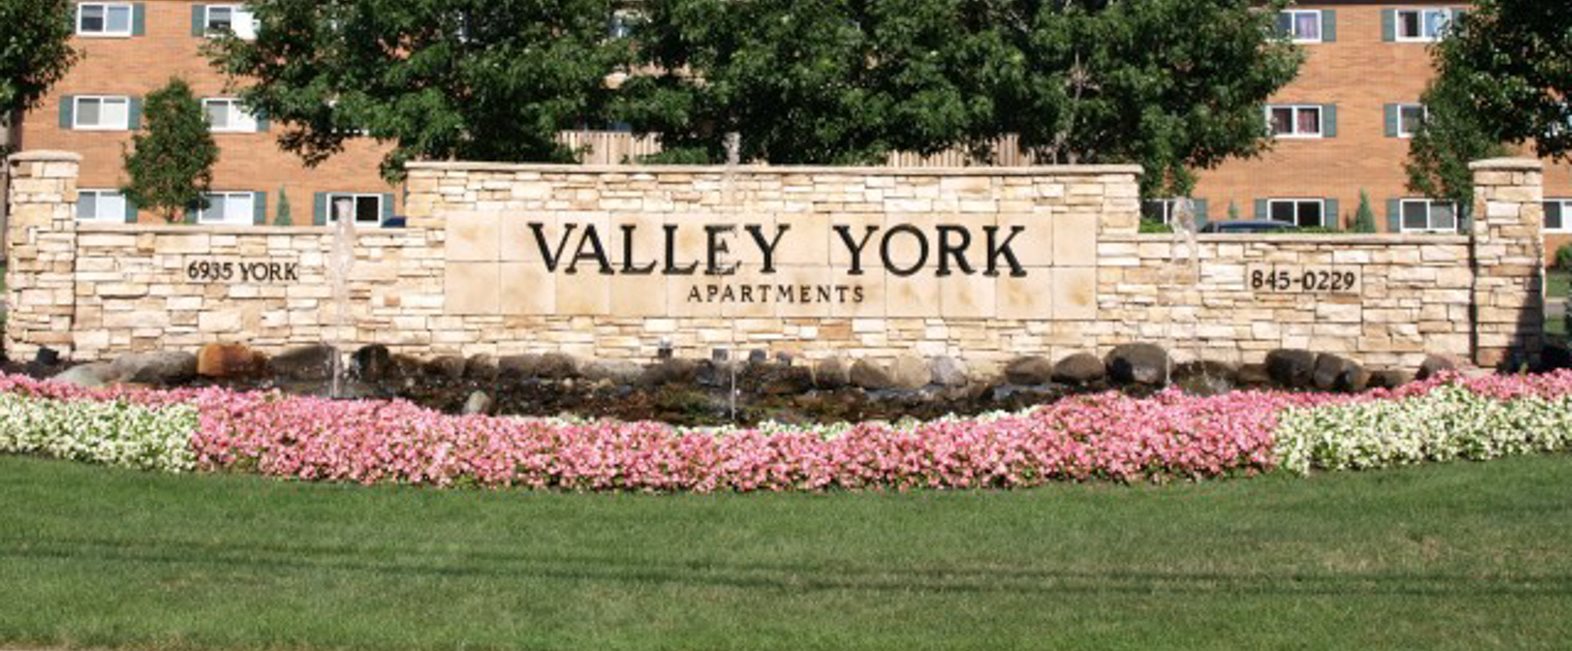 Valley York Sign